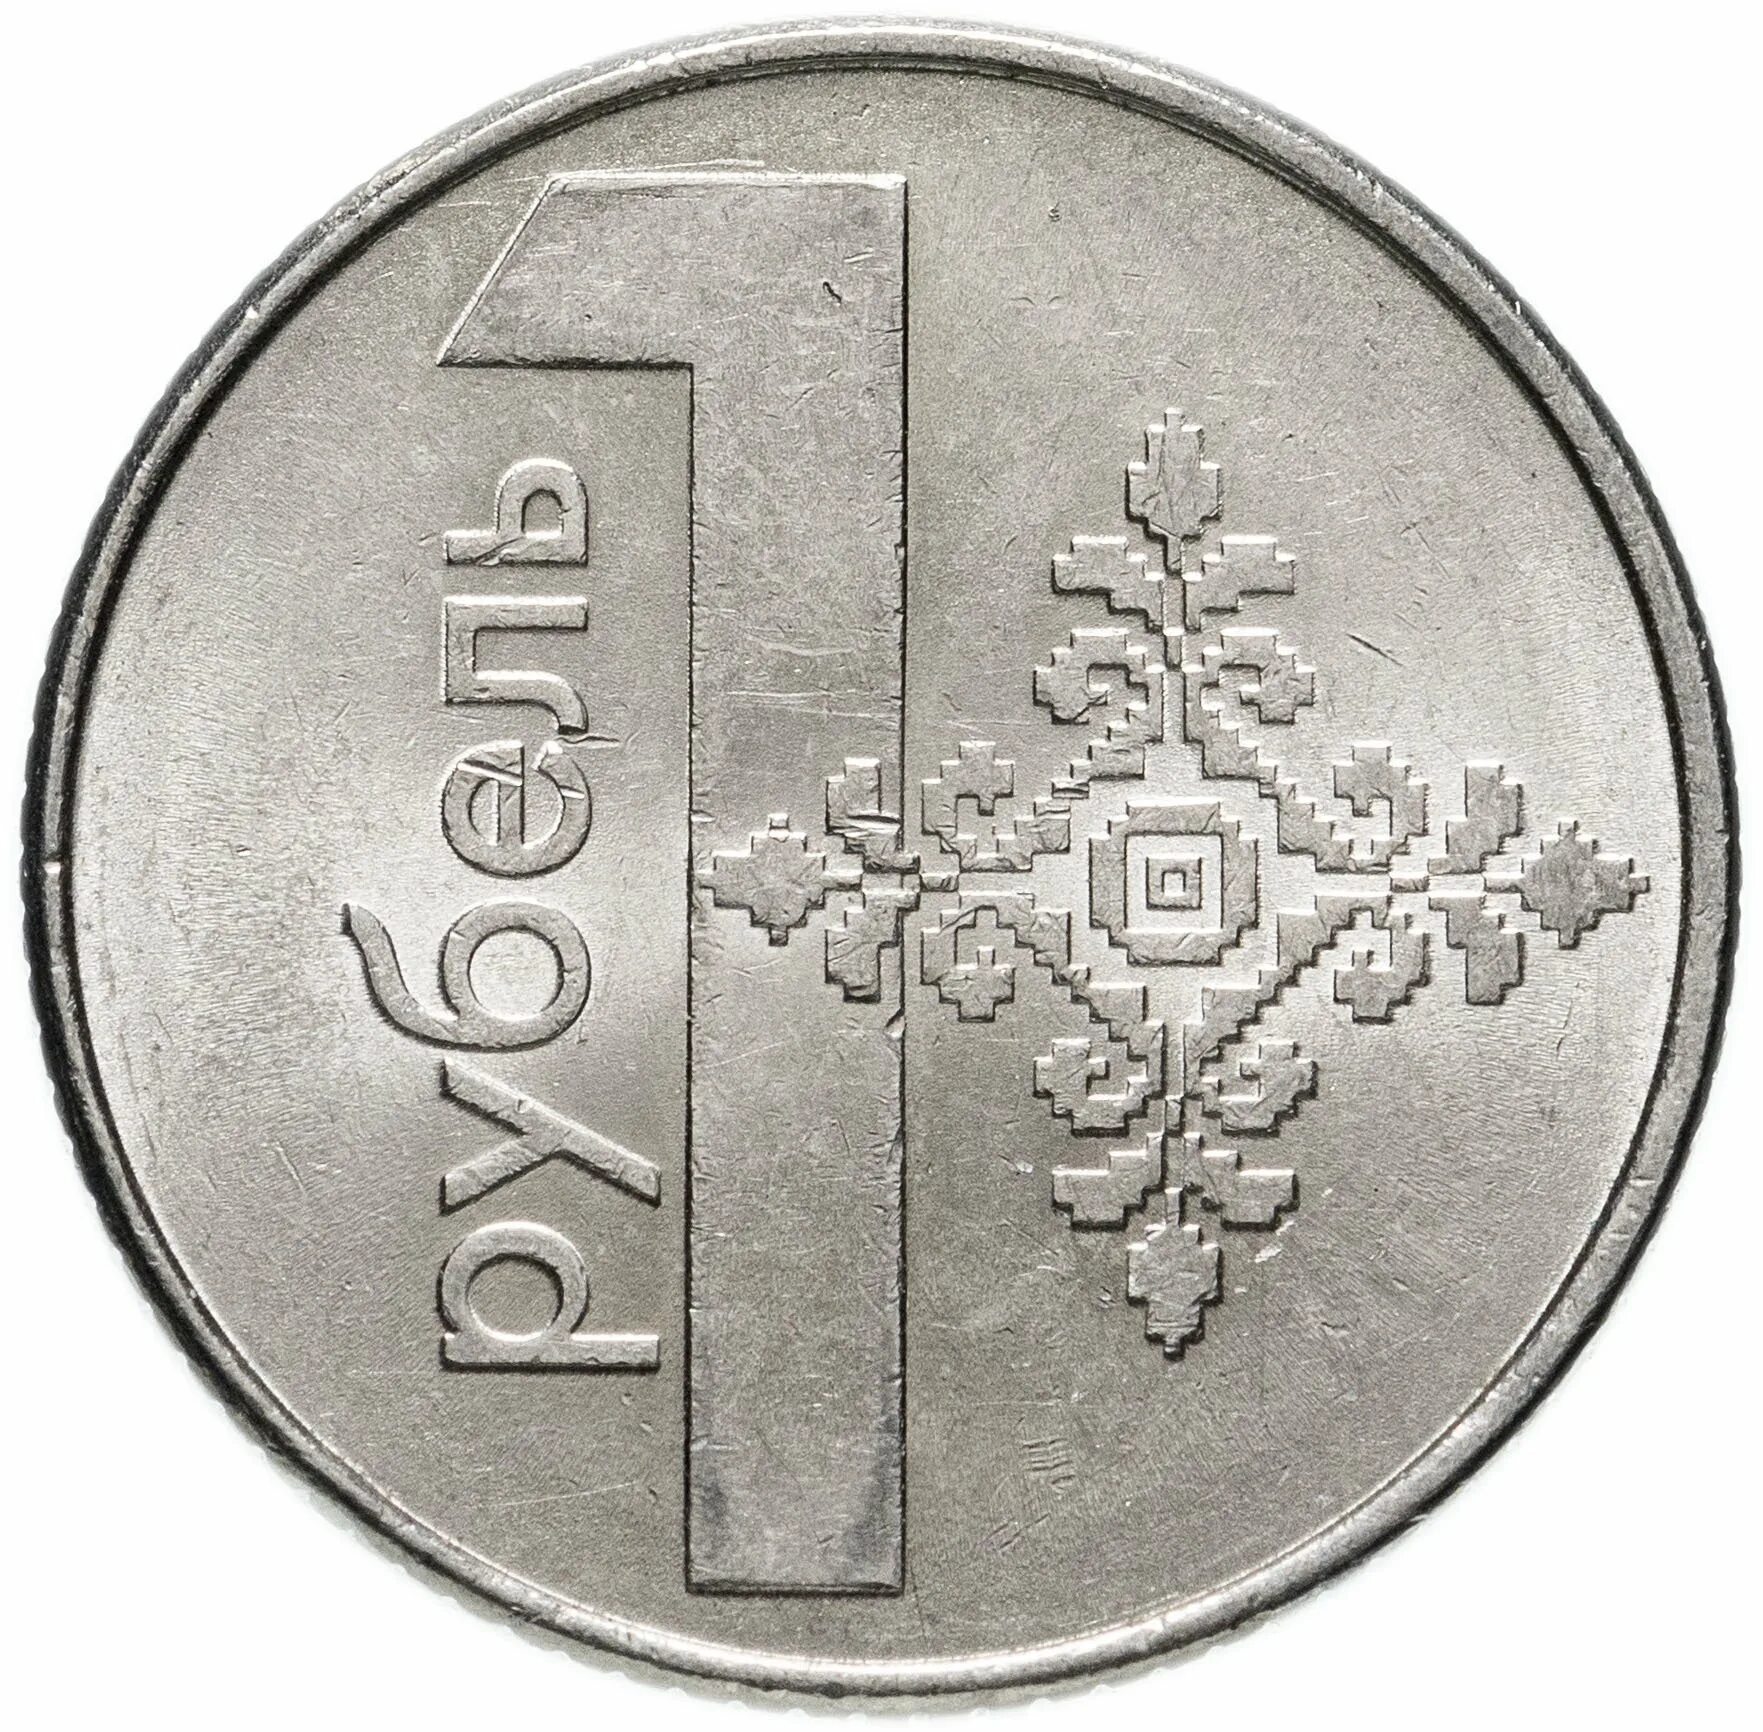 Бела в рубли. Белорусский рубль монета. 1 Рубль Беларусь 2009. 1 Белорусский рубль. Монета 1 рубль Беларусь 2009.